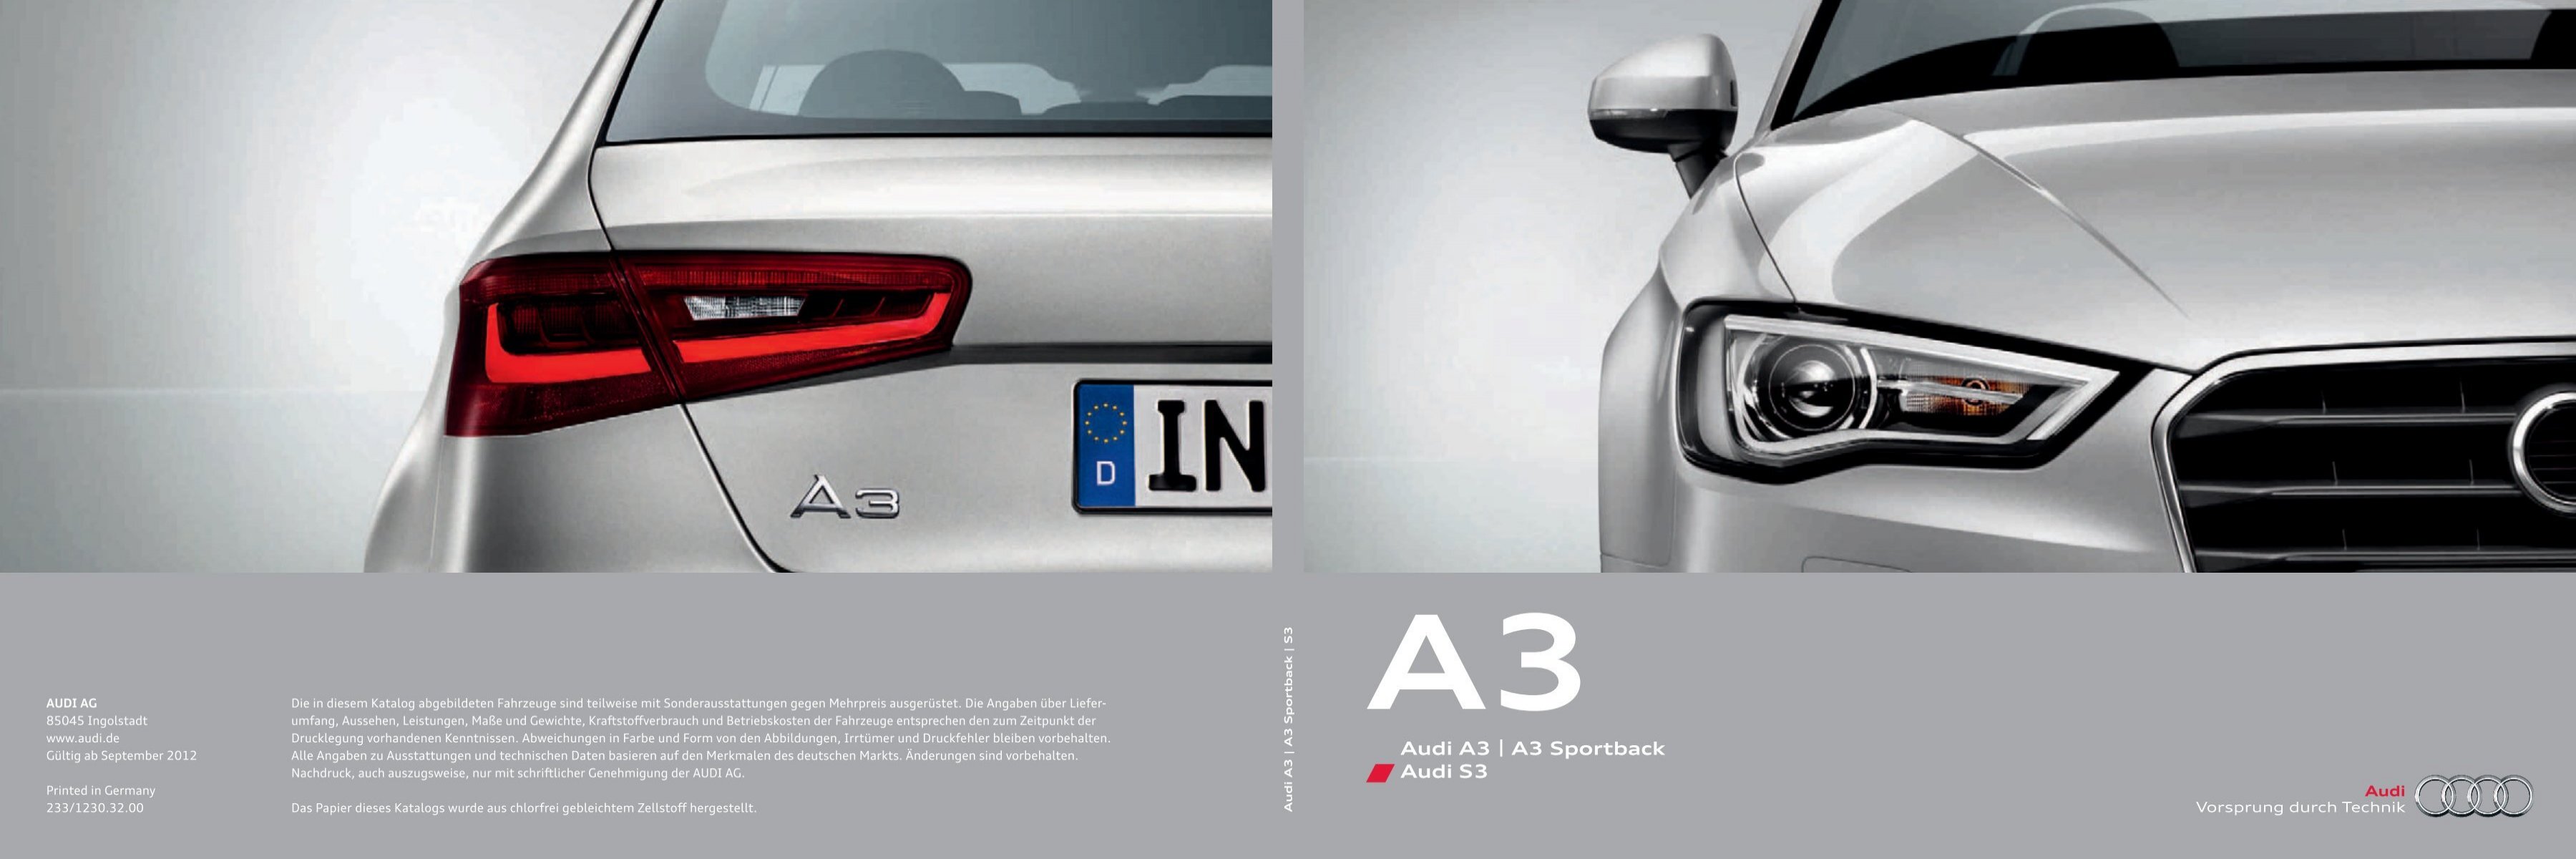 A3 Sportback > A3 > Audi Deutschland